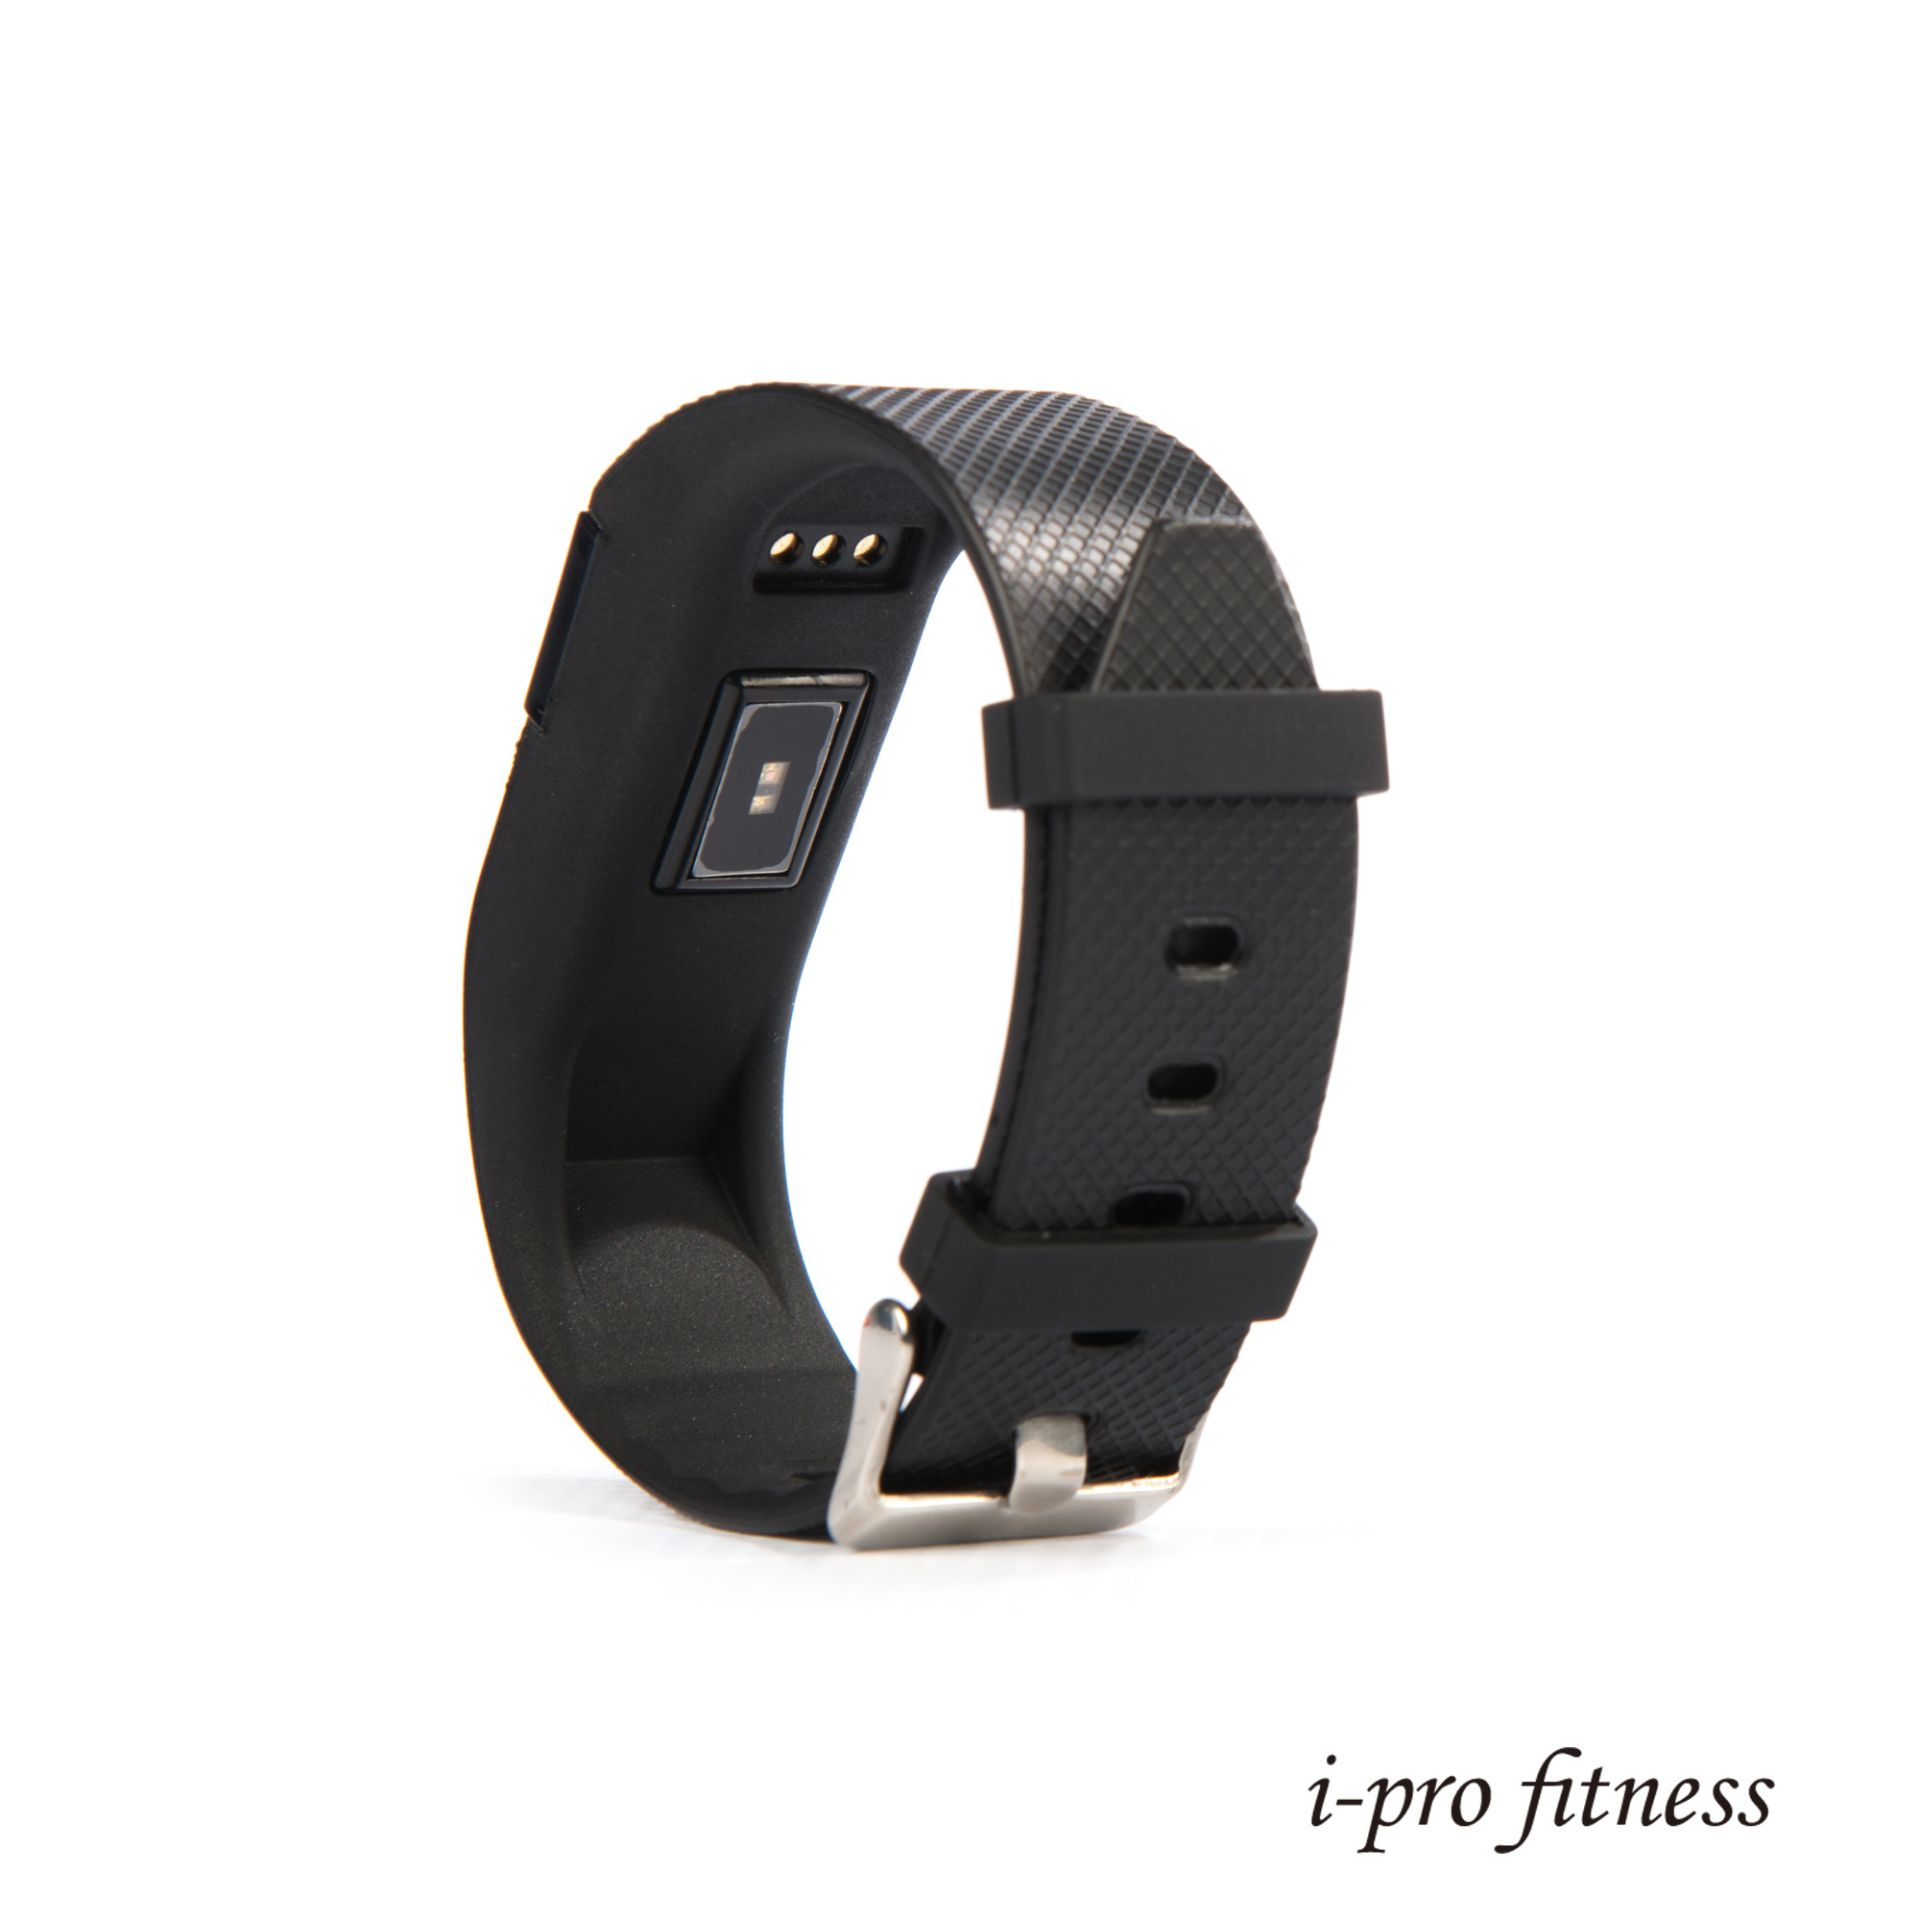 20x Fitness Tracker i-pro fitness, Bluetooth 4.0 Sports Smart Bracelet, Heart Rate Monitor & - Image 8 of 8